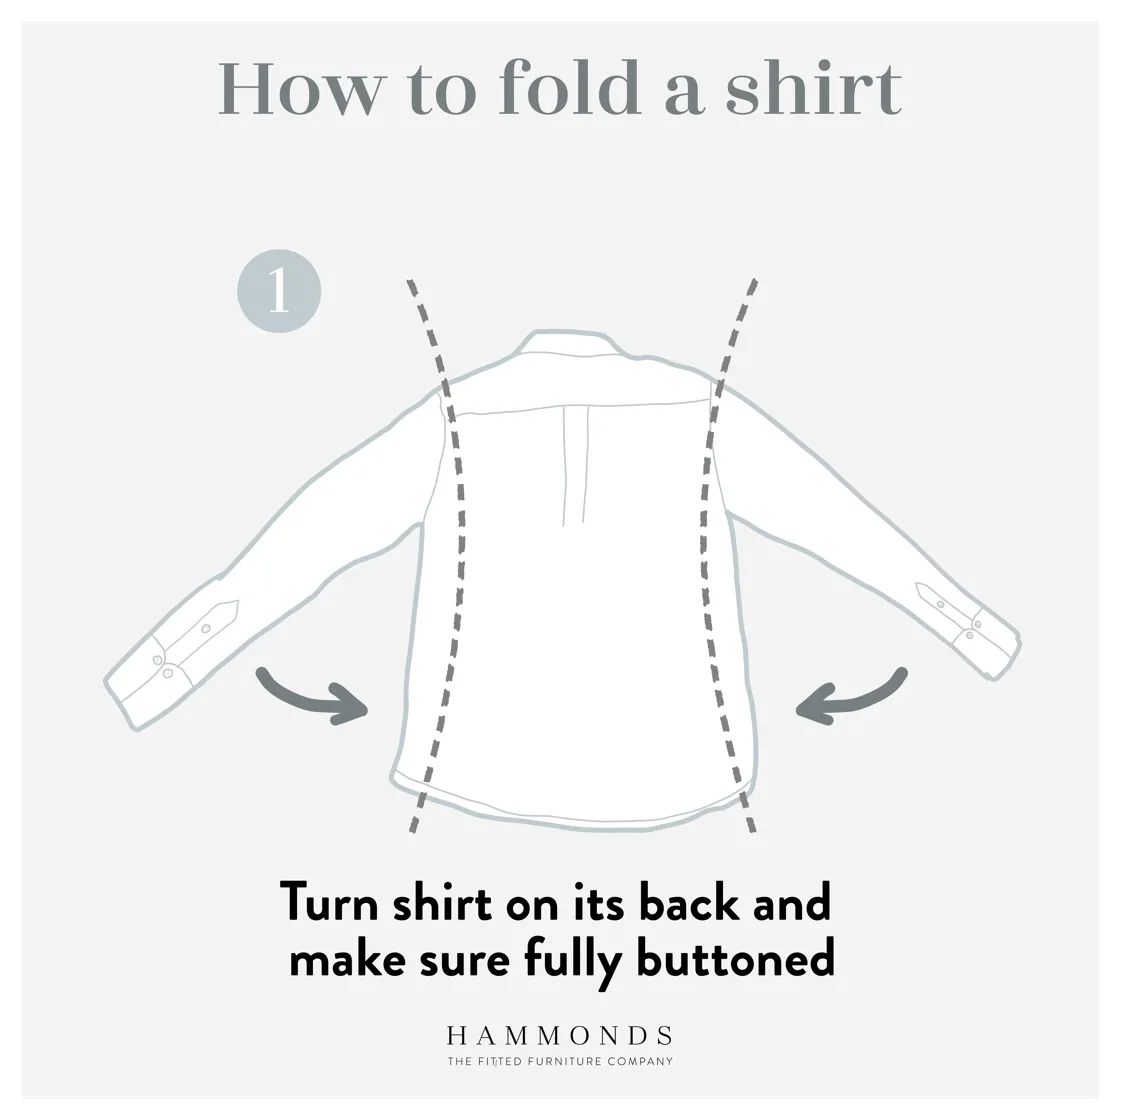 Folding hacks that will save you wardrobe space | Hammonds